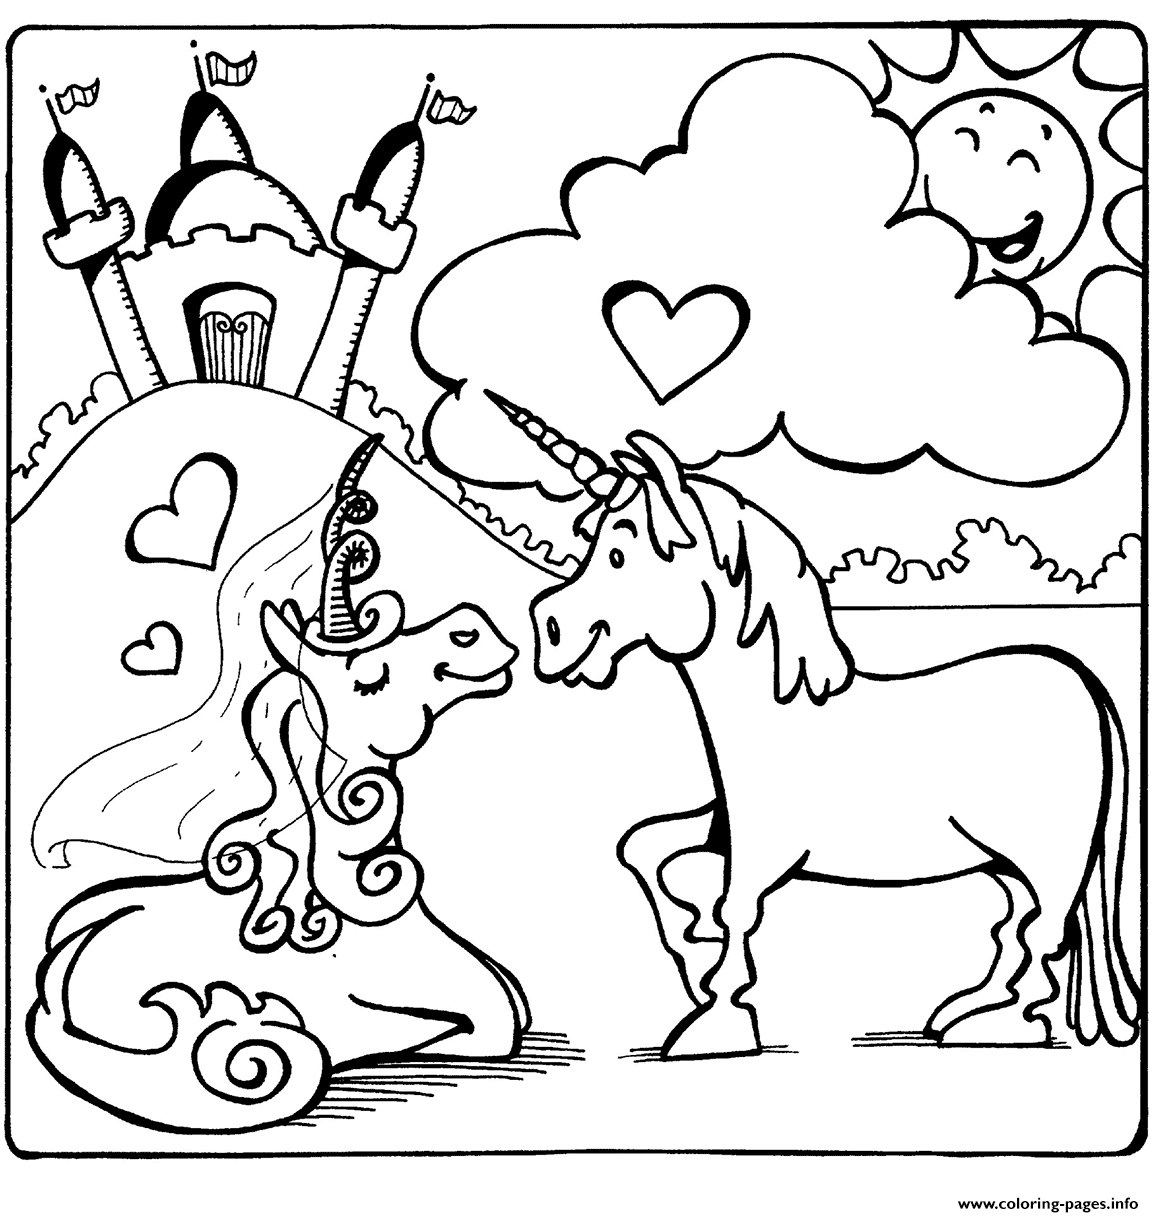 Unicorns In Love coloring